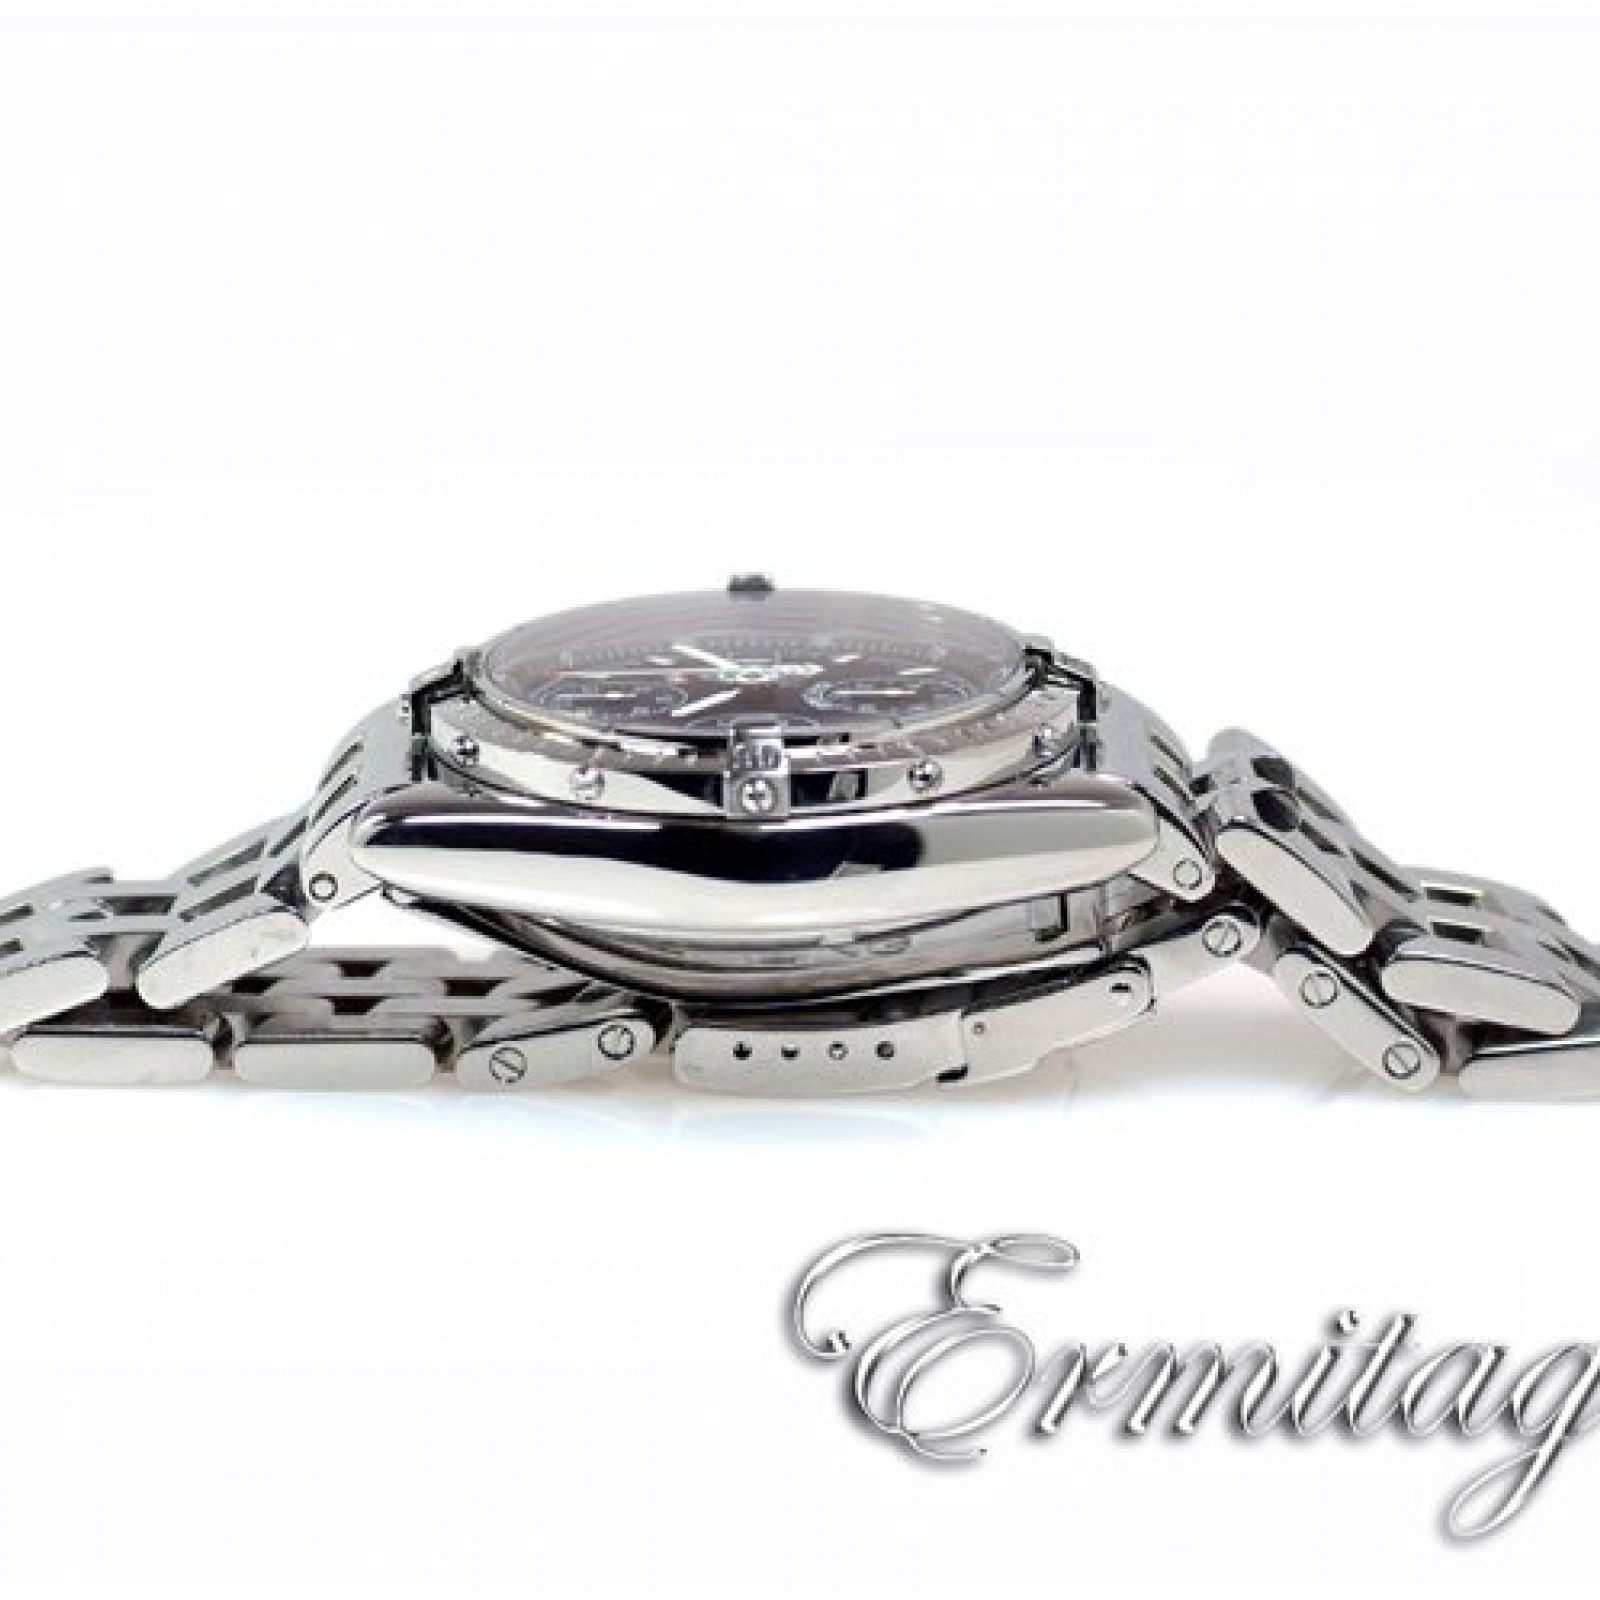 Breitling Chronomat Blackbird A13050.1 Steel